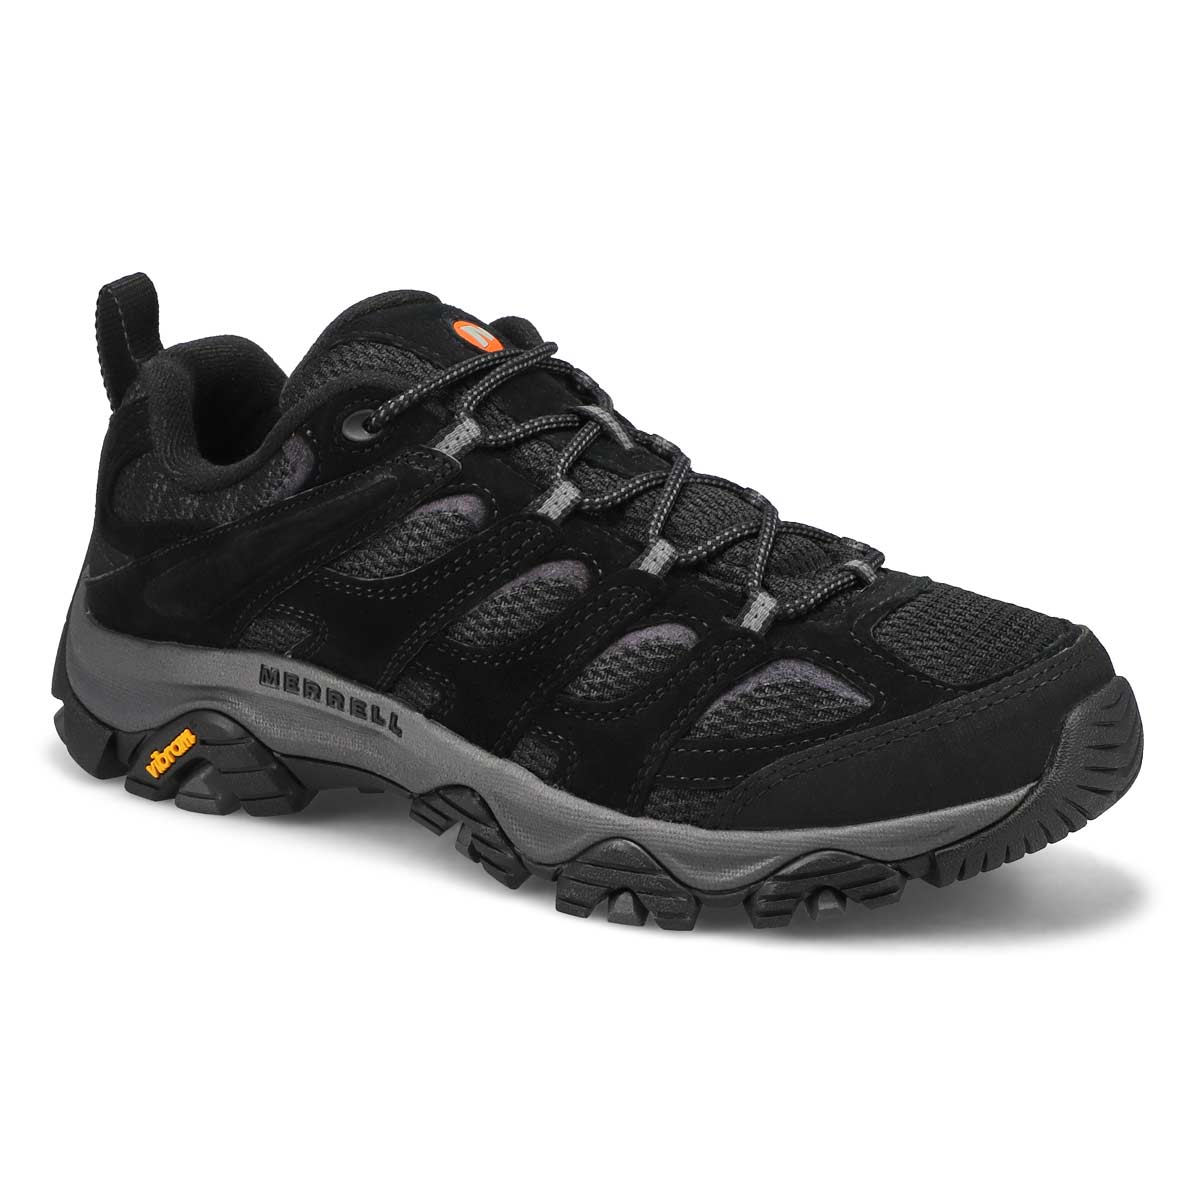 Merrell Men's Moab 3 Hiking Shoes, Waterproof